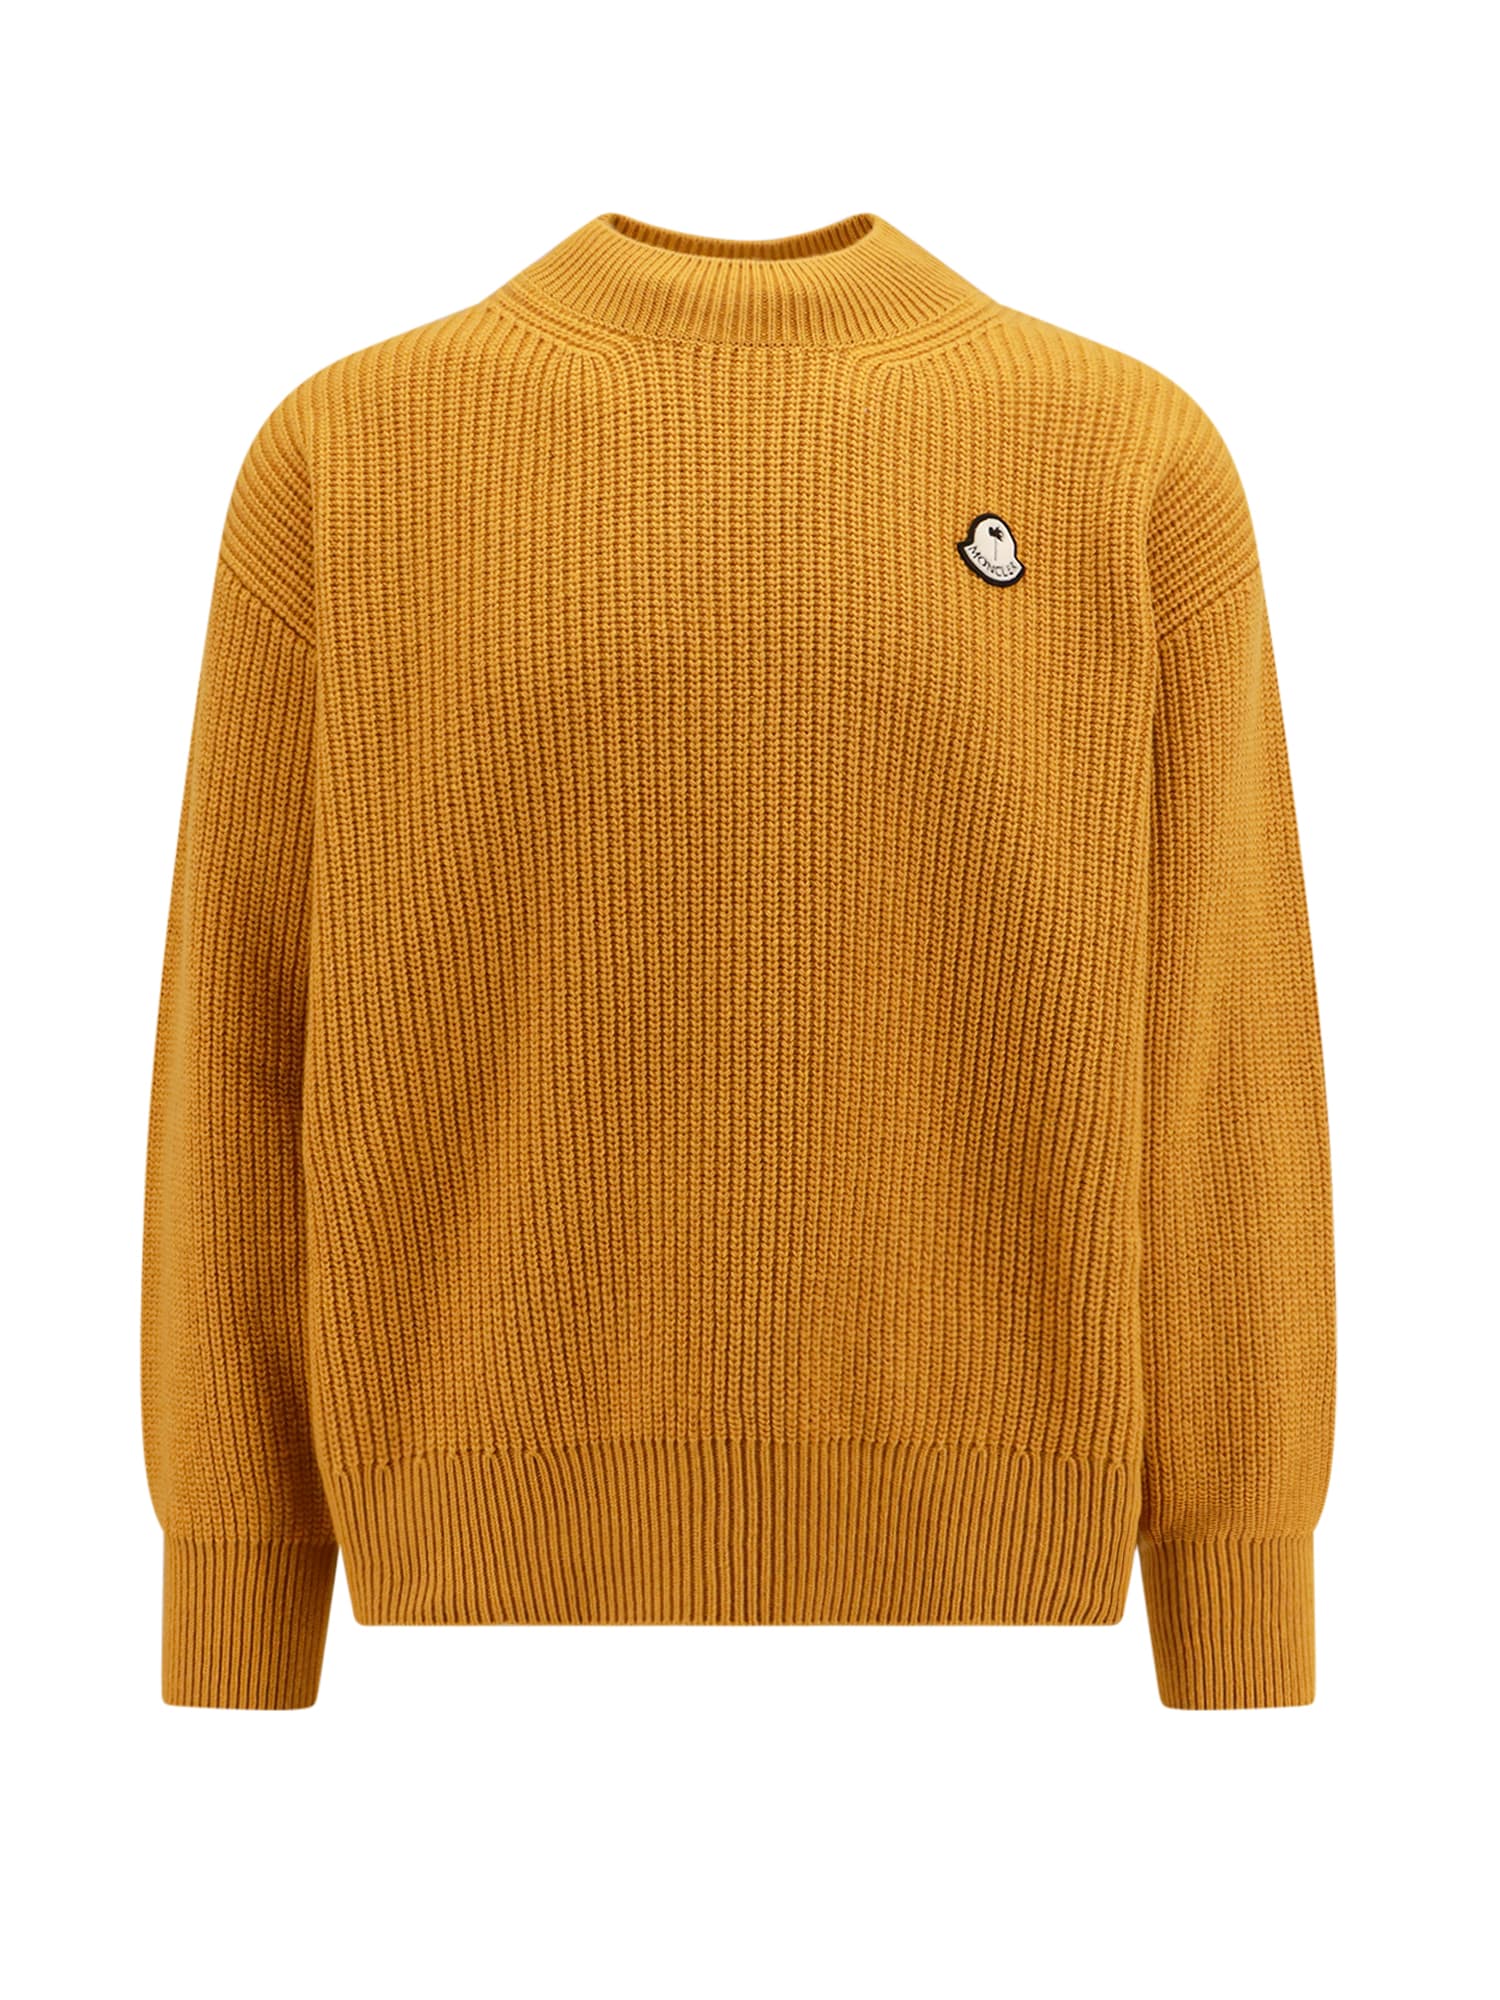 Moncler Genius Sweater